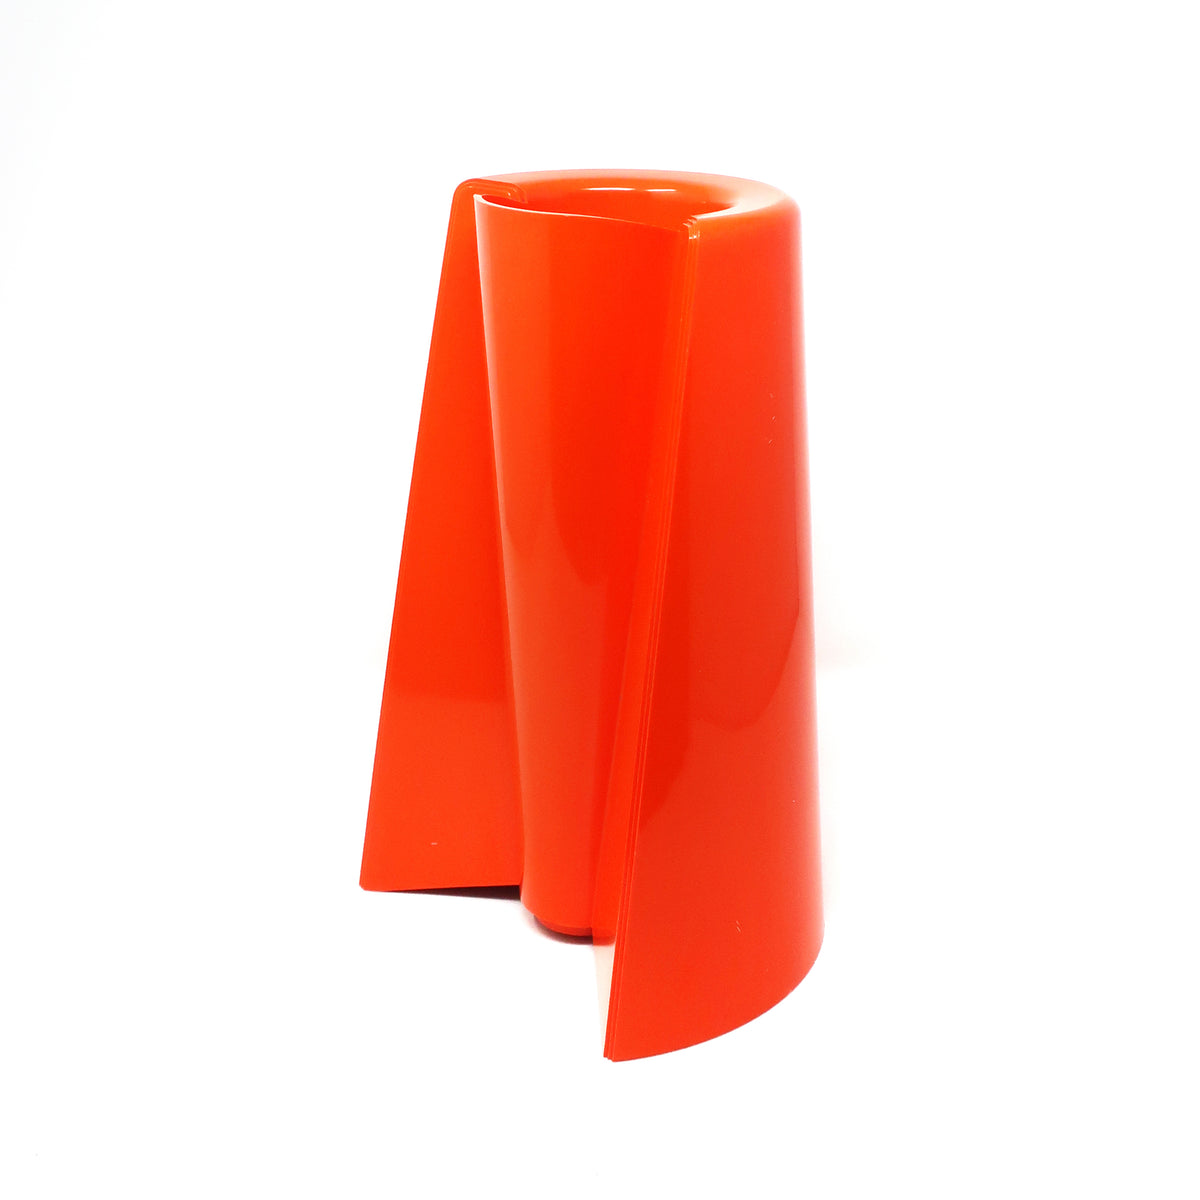 Orange Pago Pago Vase by Enzo Mari for Danese | Tenon Design